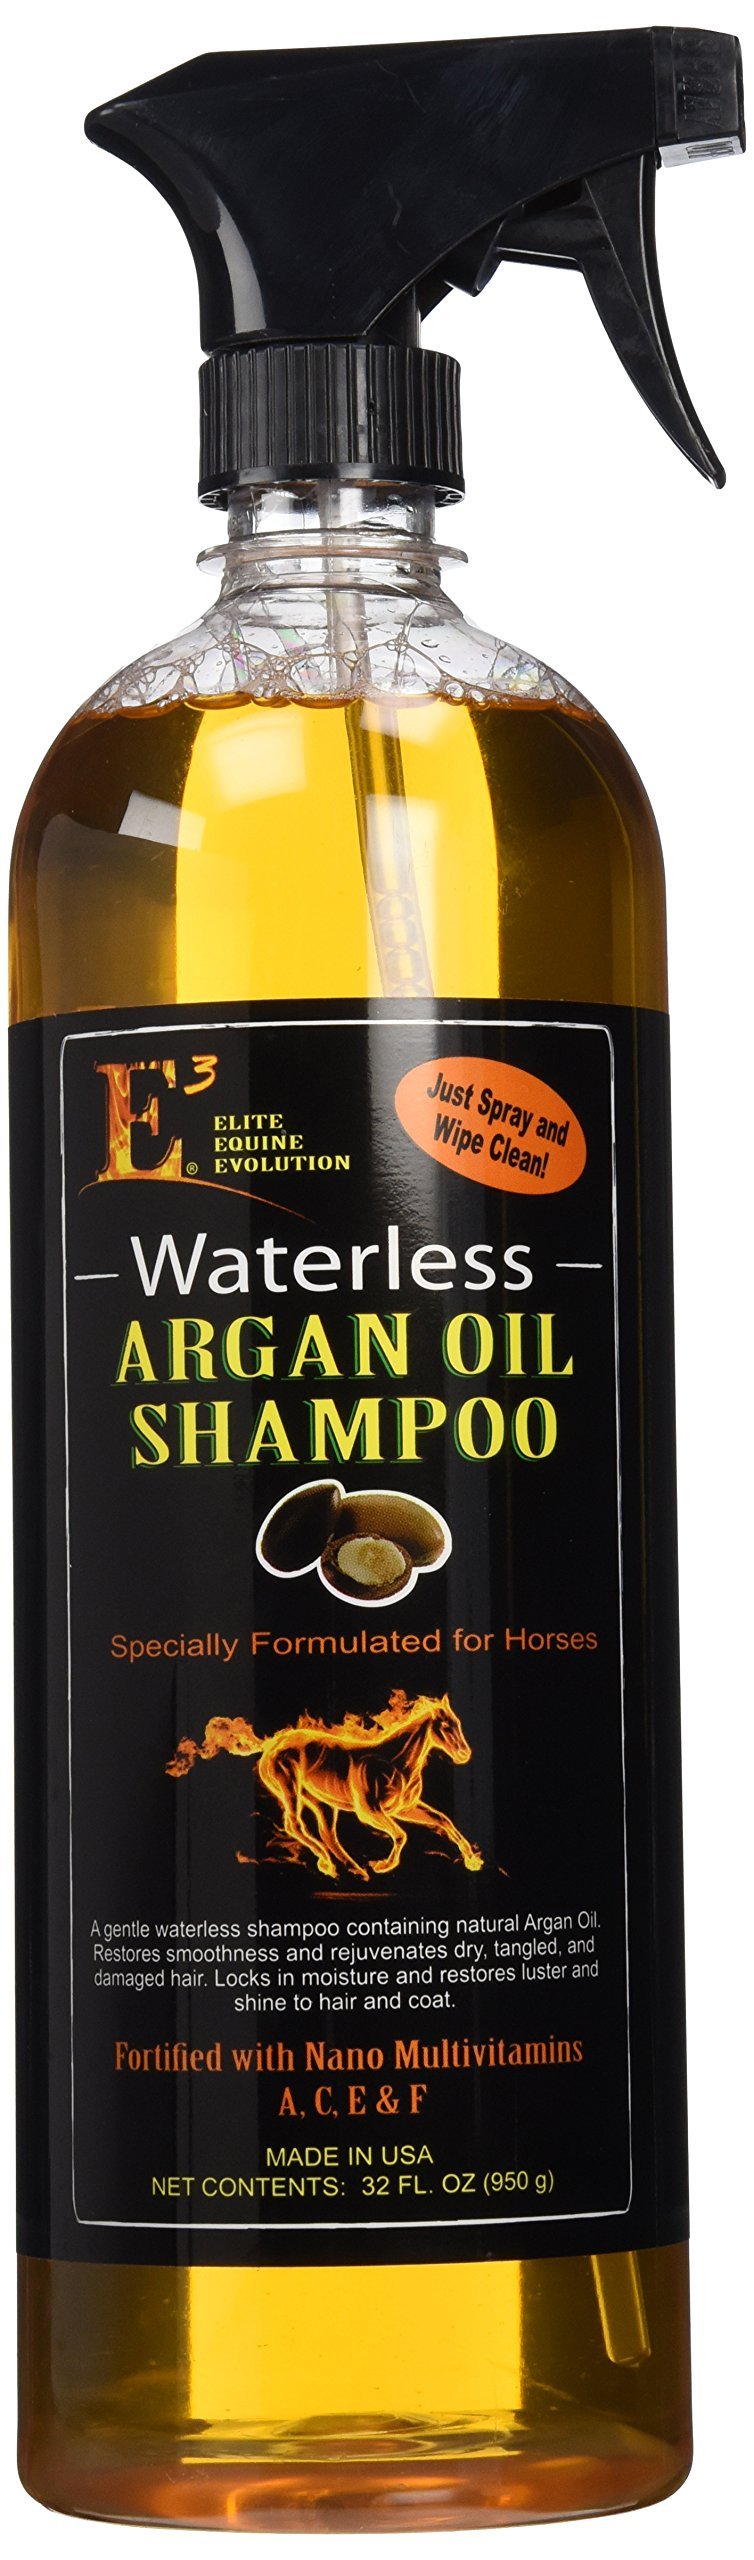 [Australia] - E3 Elite Argan Oil Shampoo for Pets, 32 oz. 